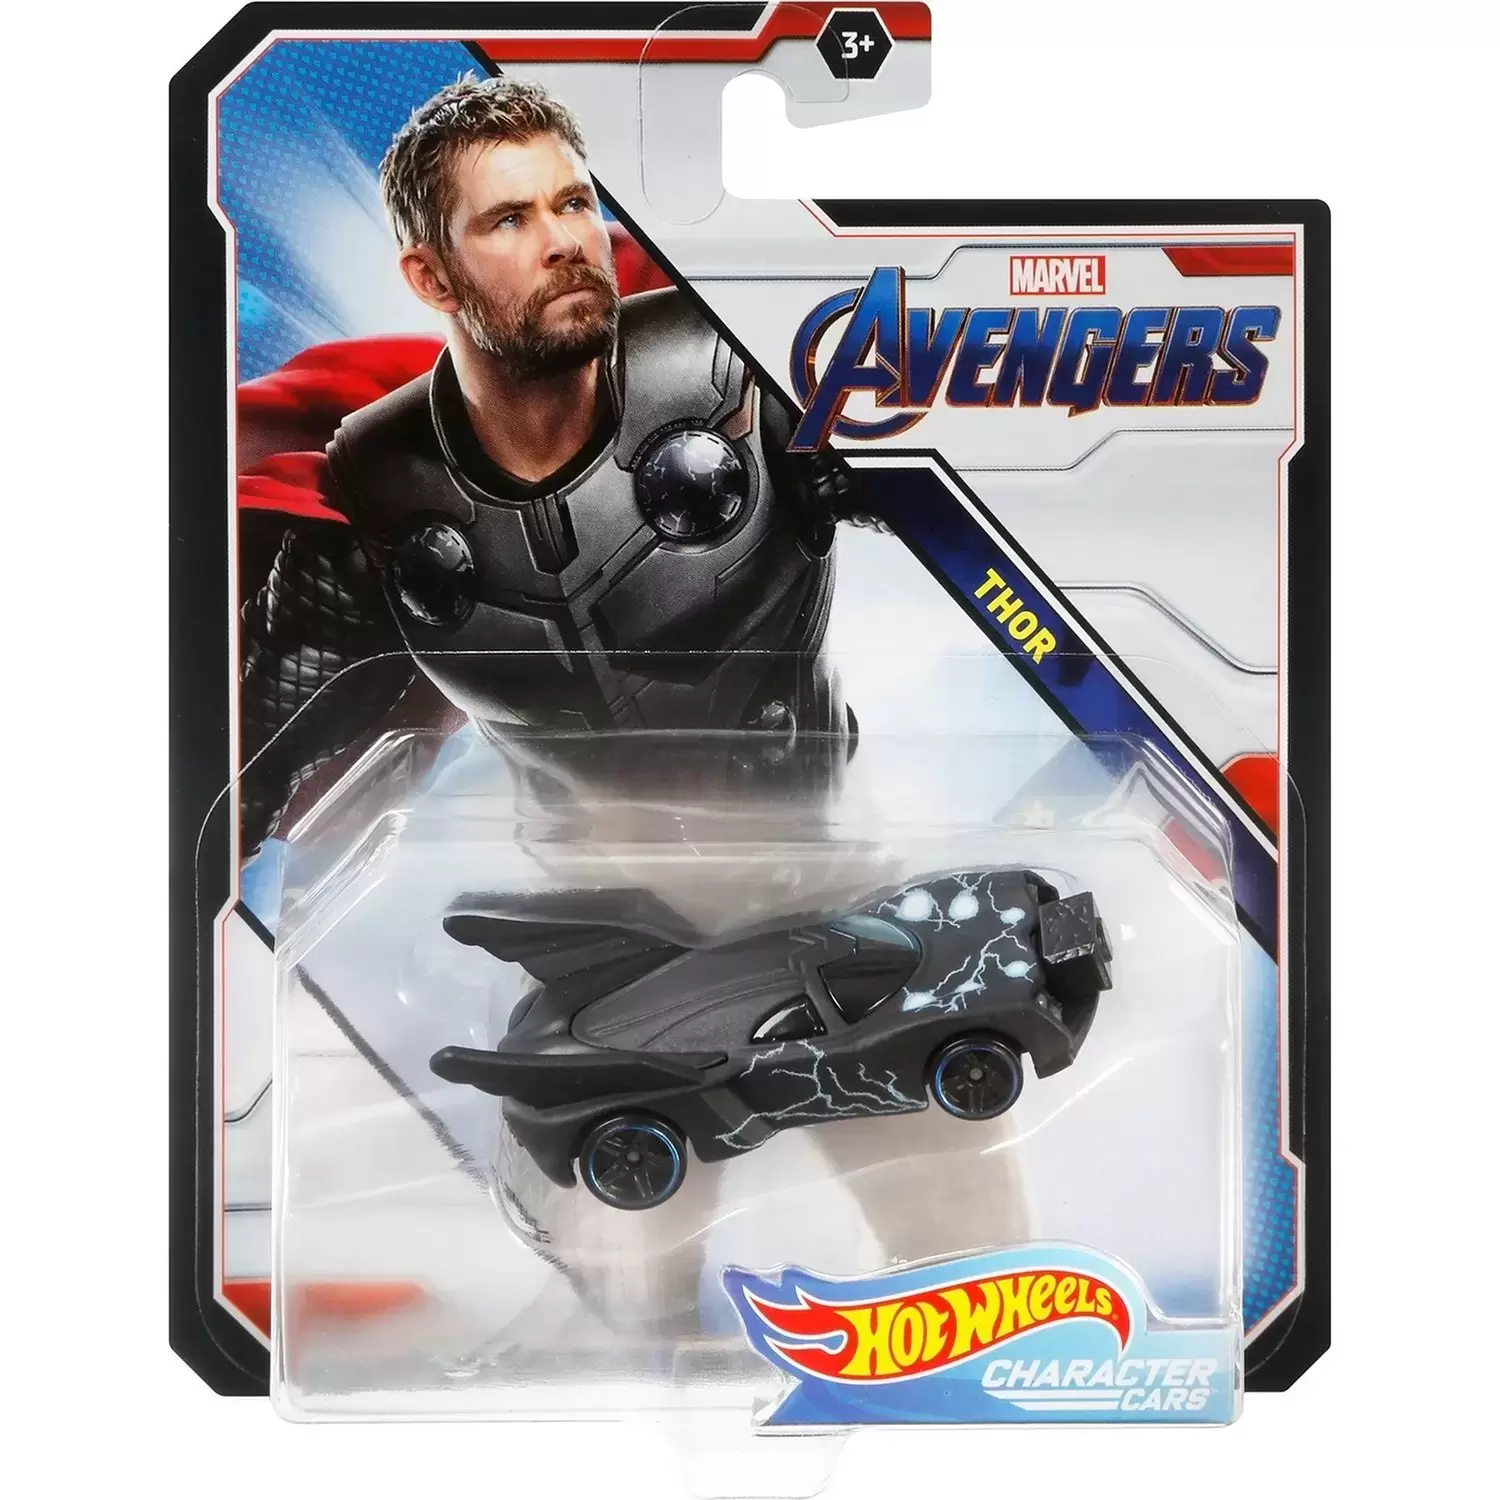 Marvel Character Cars - Avengers - Thor